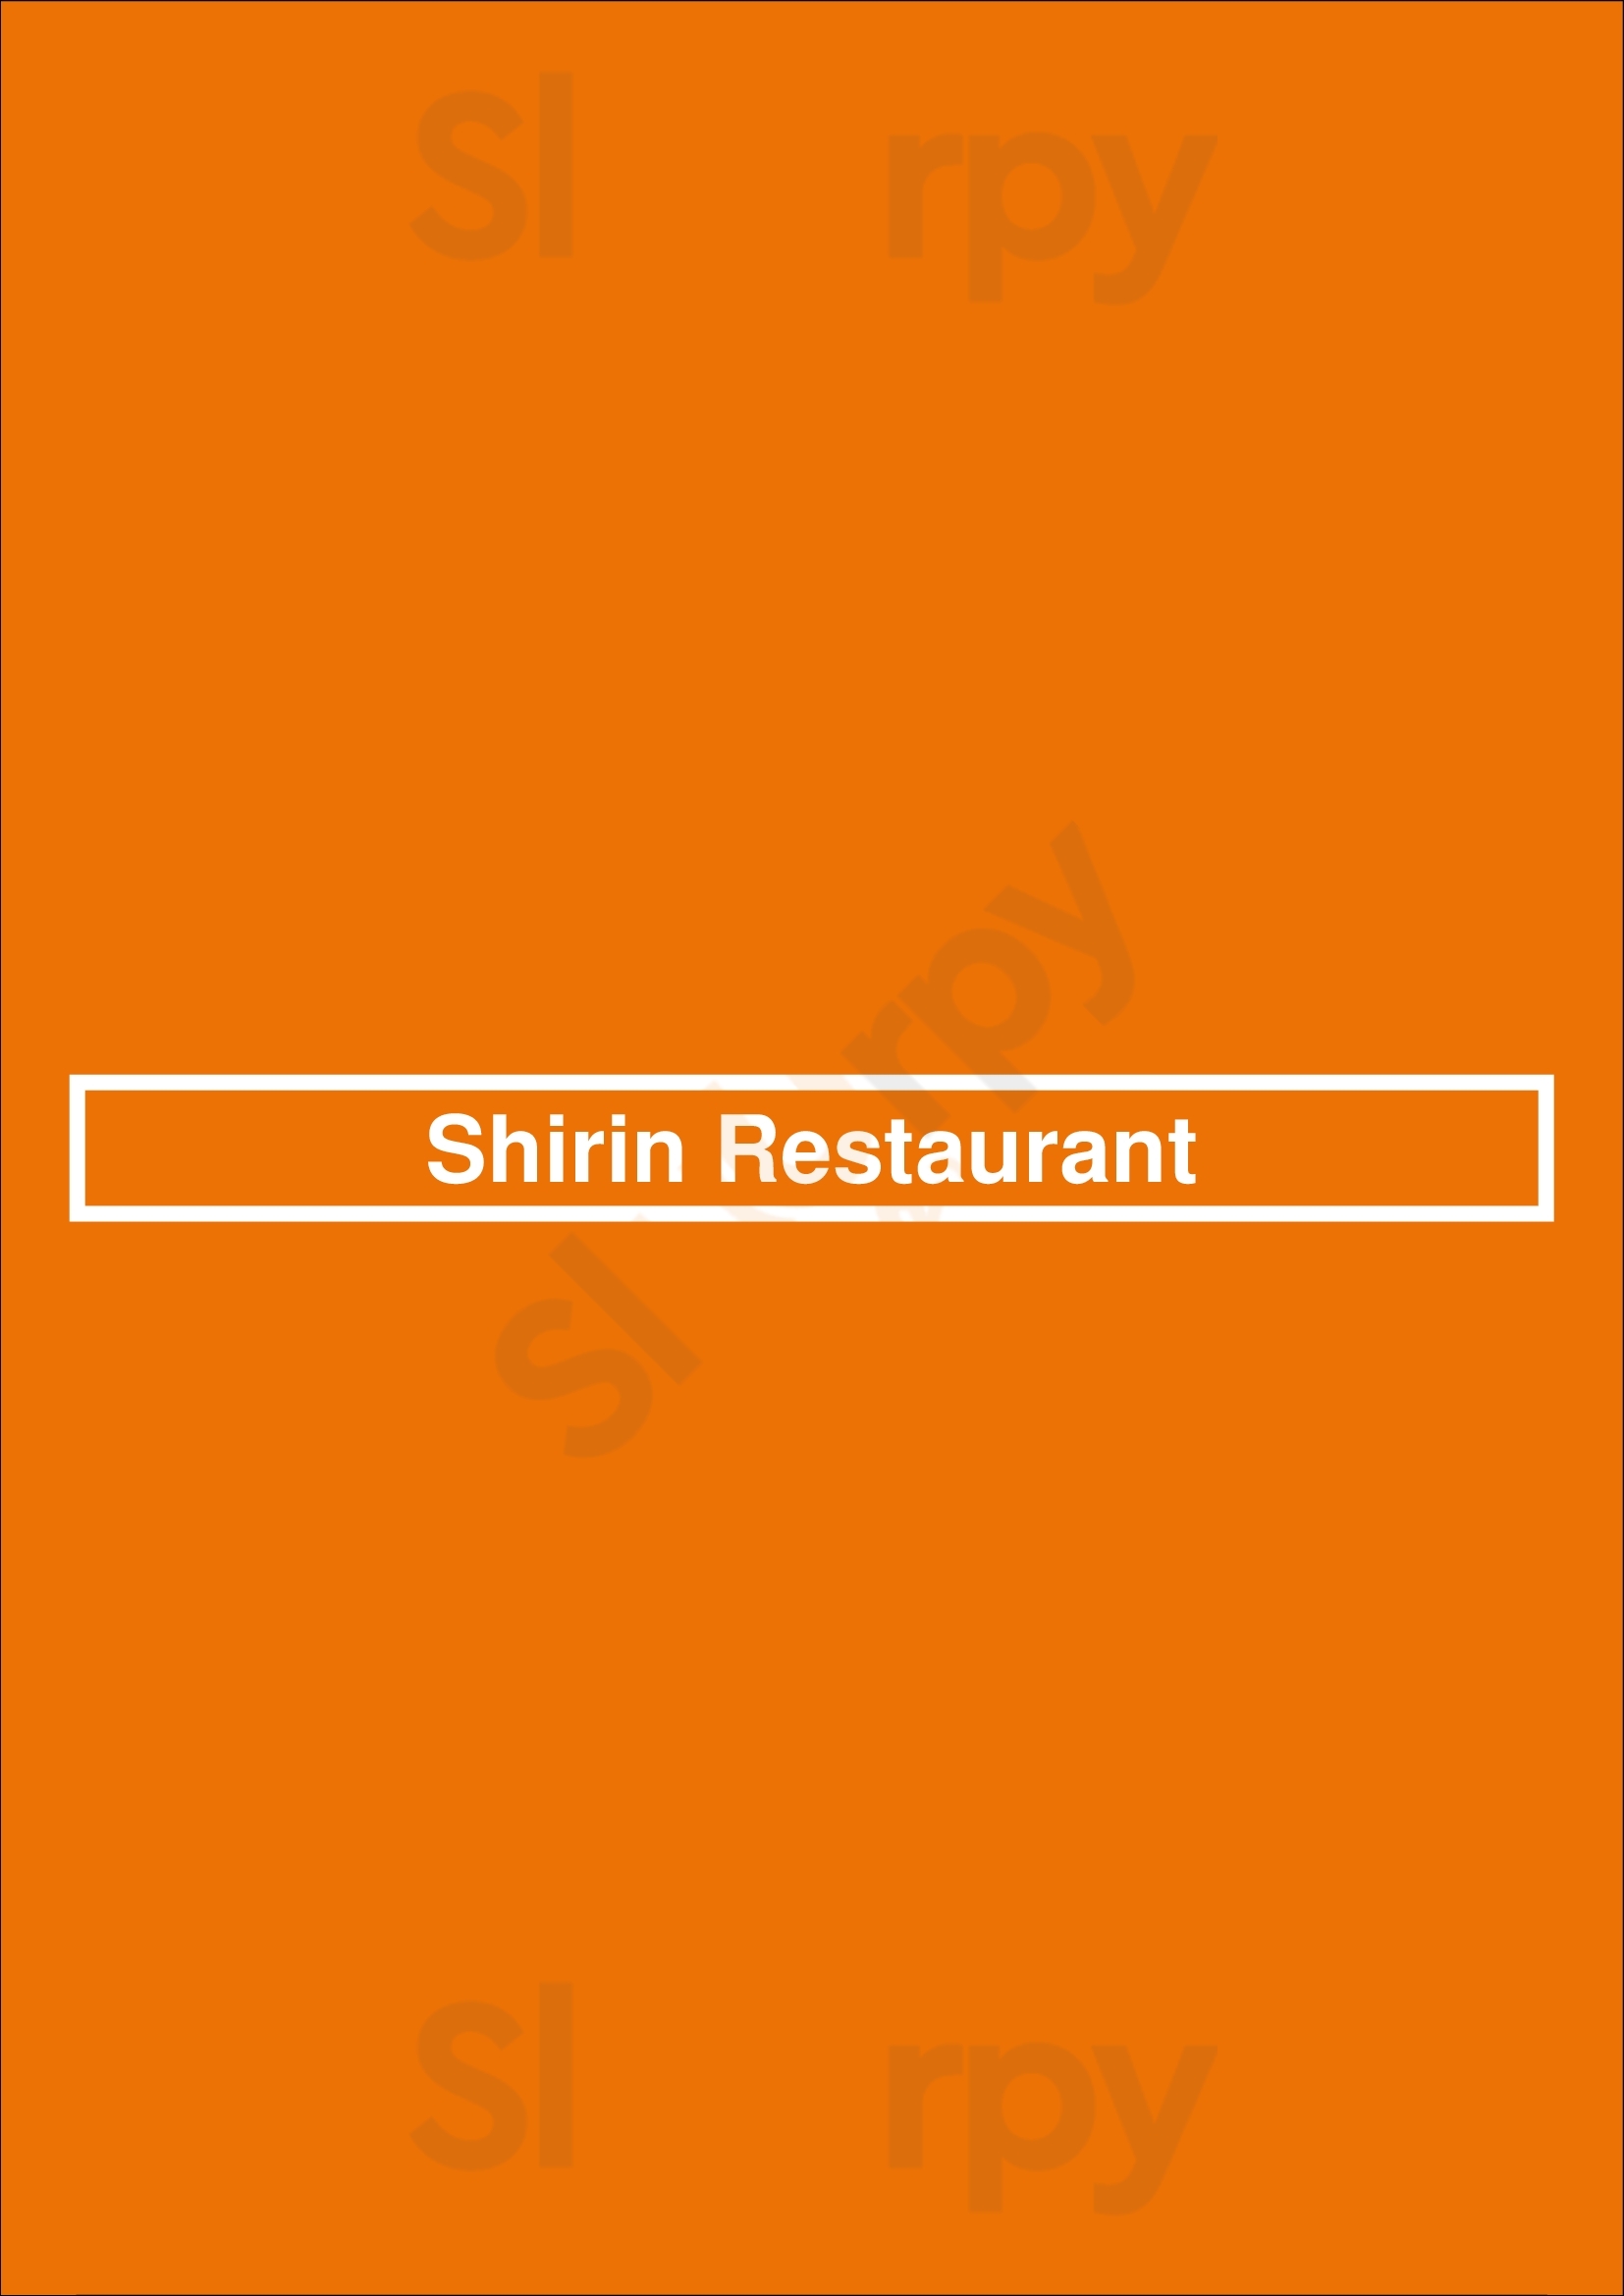 Shirin Restaurant Los Angeles Menu - 1